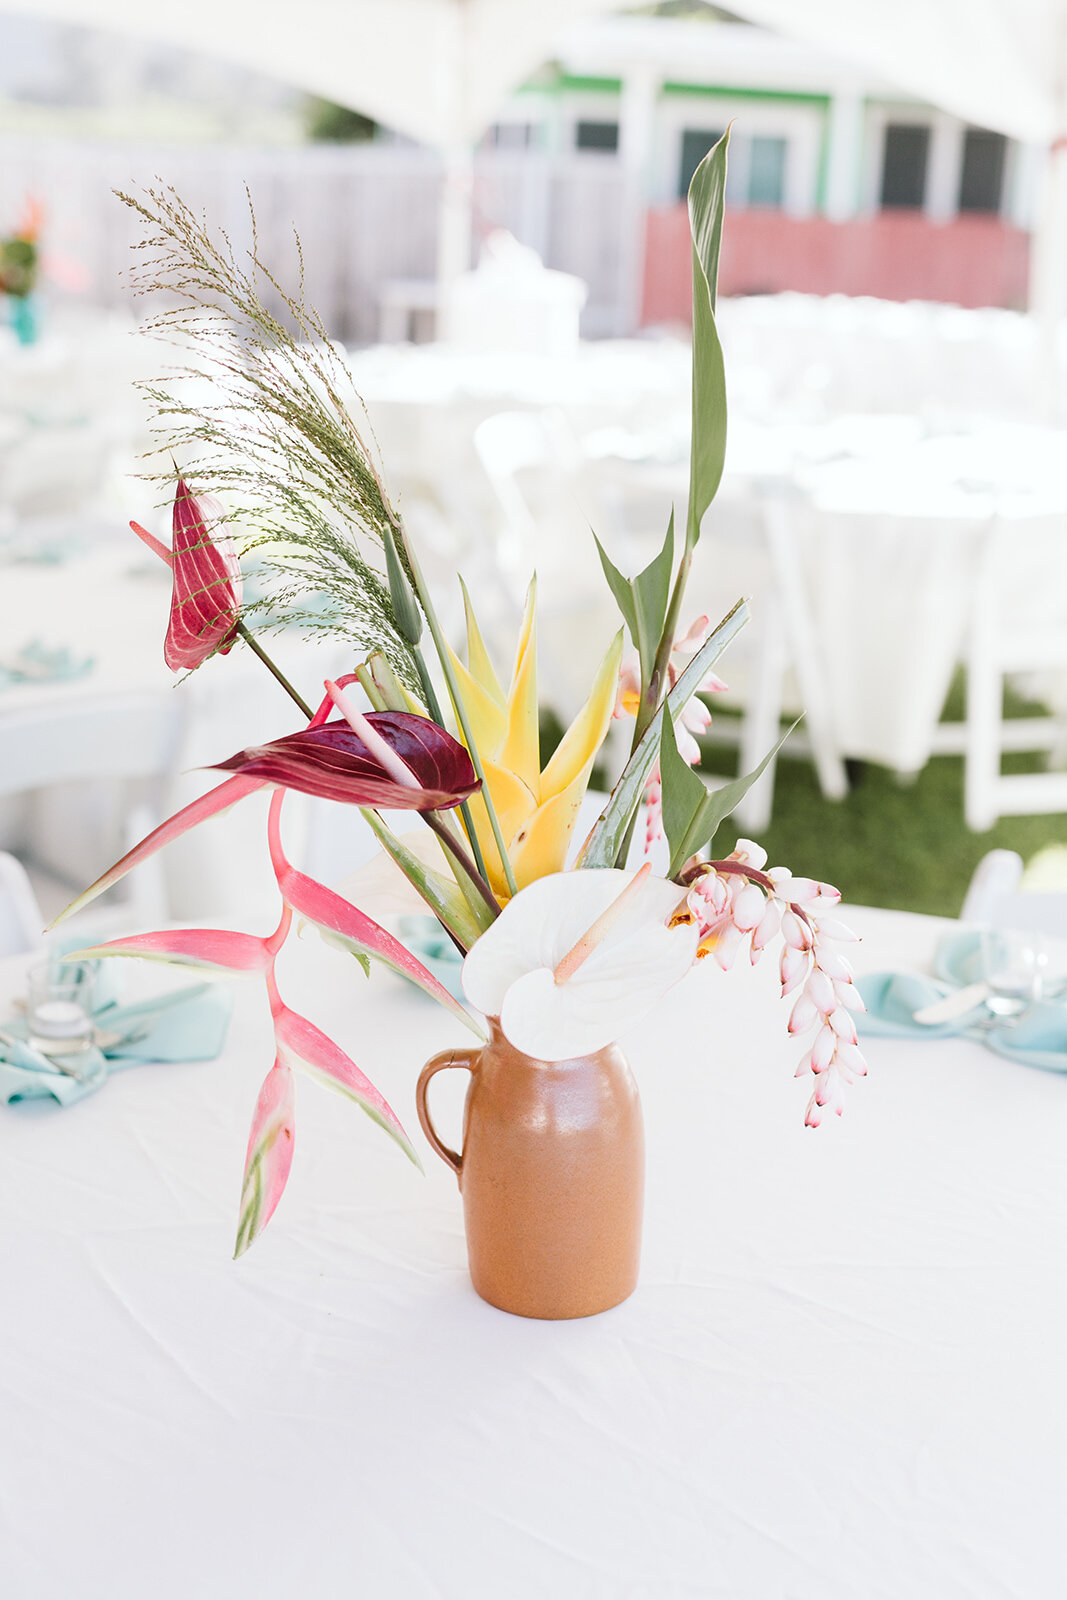 Mokuleia-North-Shore-Hawaii-Beach-House-Wedding-reception-details-floral-centerpieces